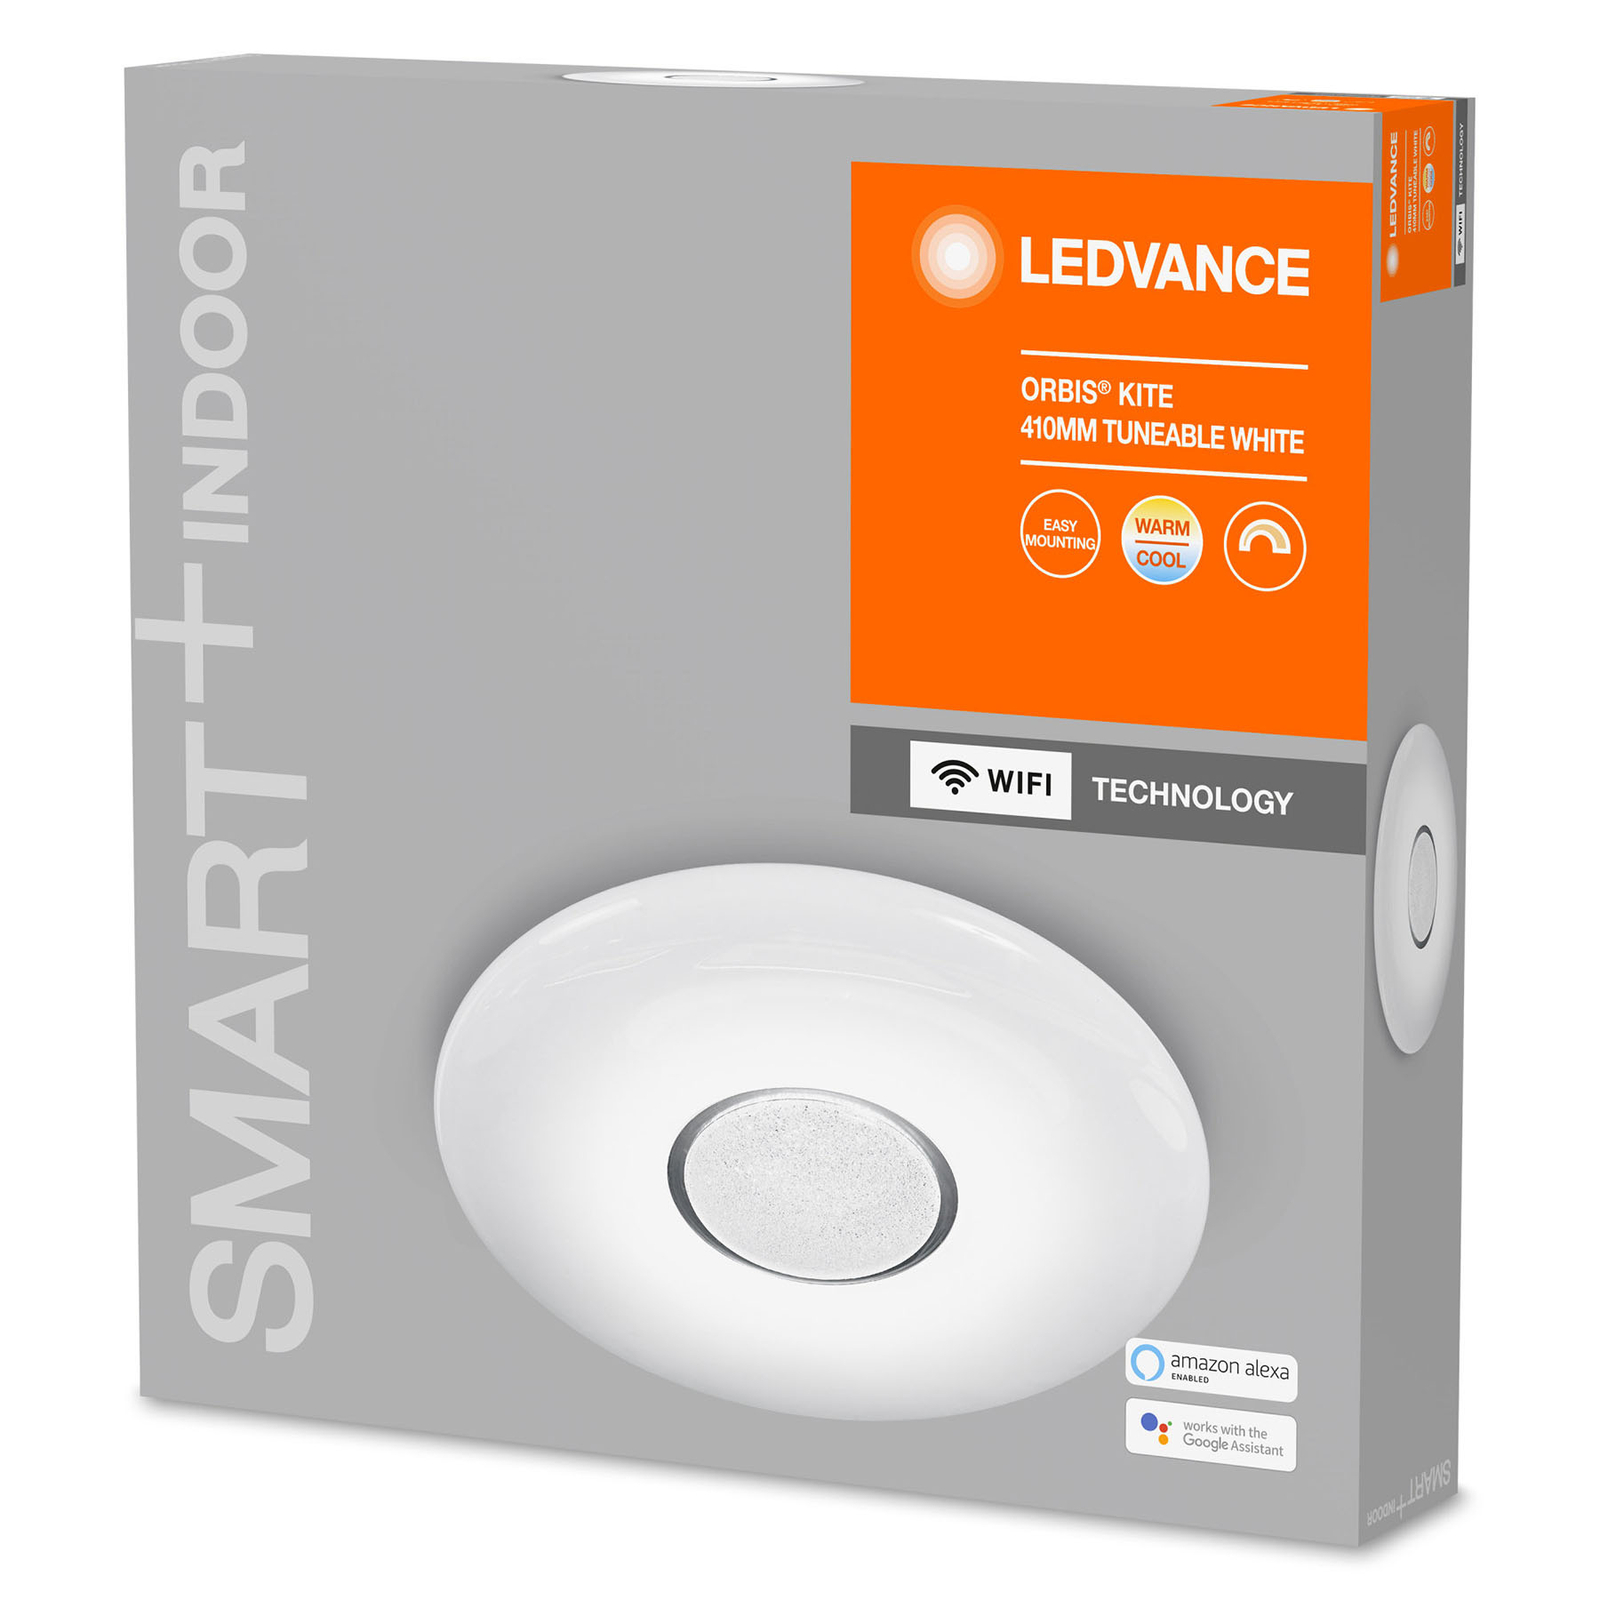 LEDVANCE SMART+ WiFi Orbis Kite 3,000-6,500K 41cm